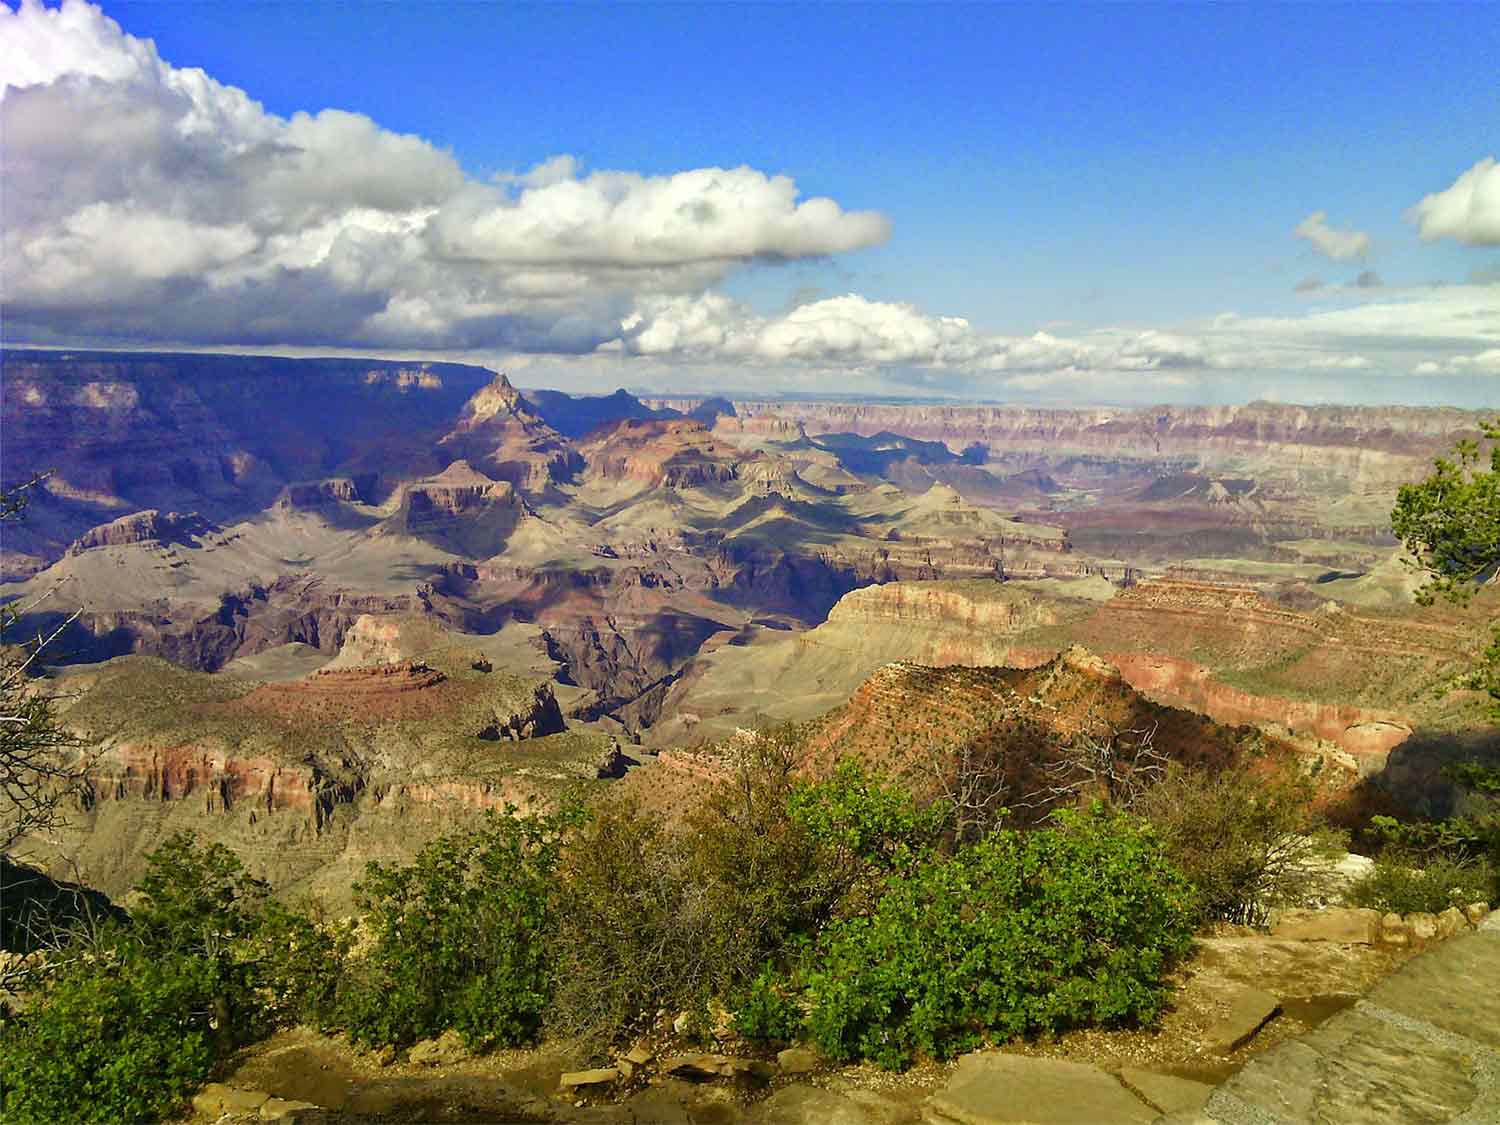 USA, Arizona, Grand Canyon